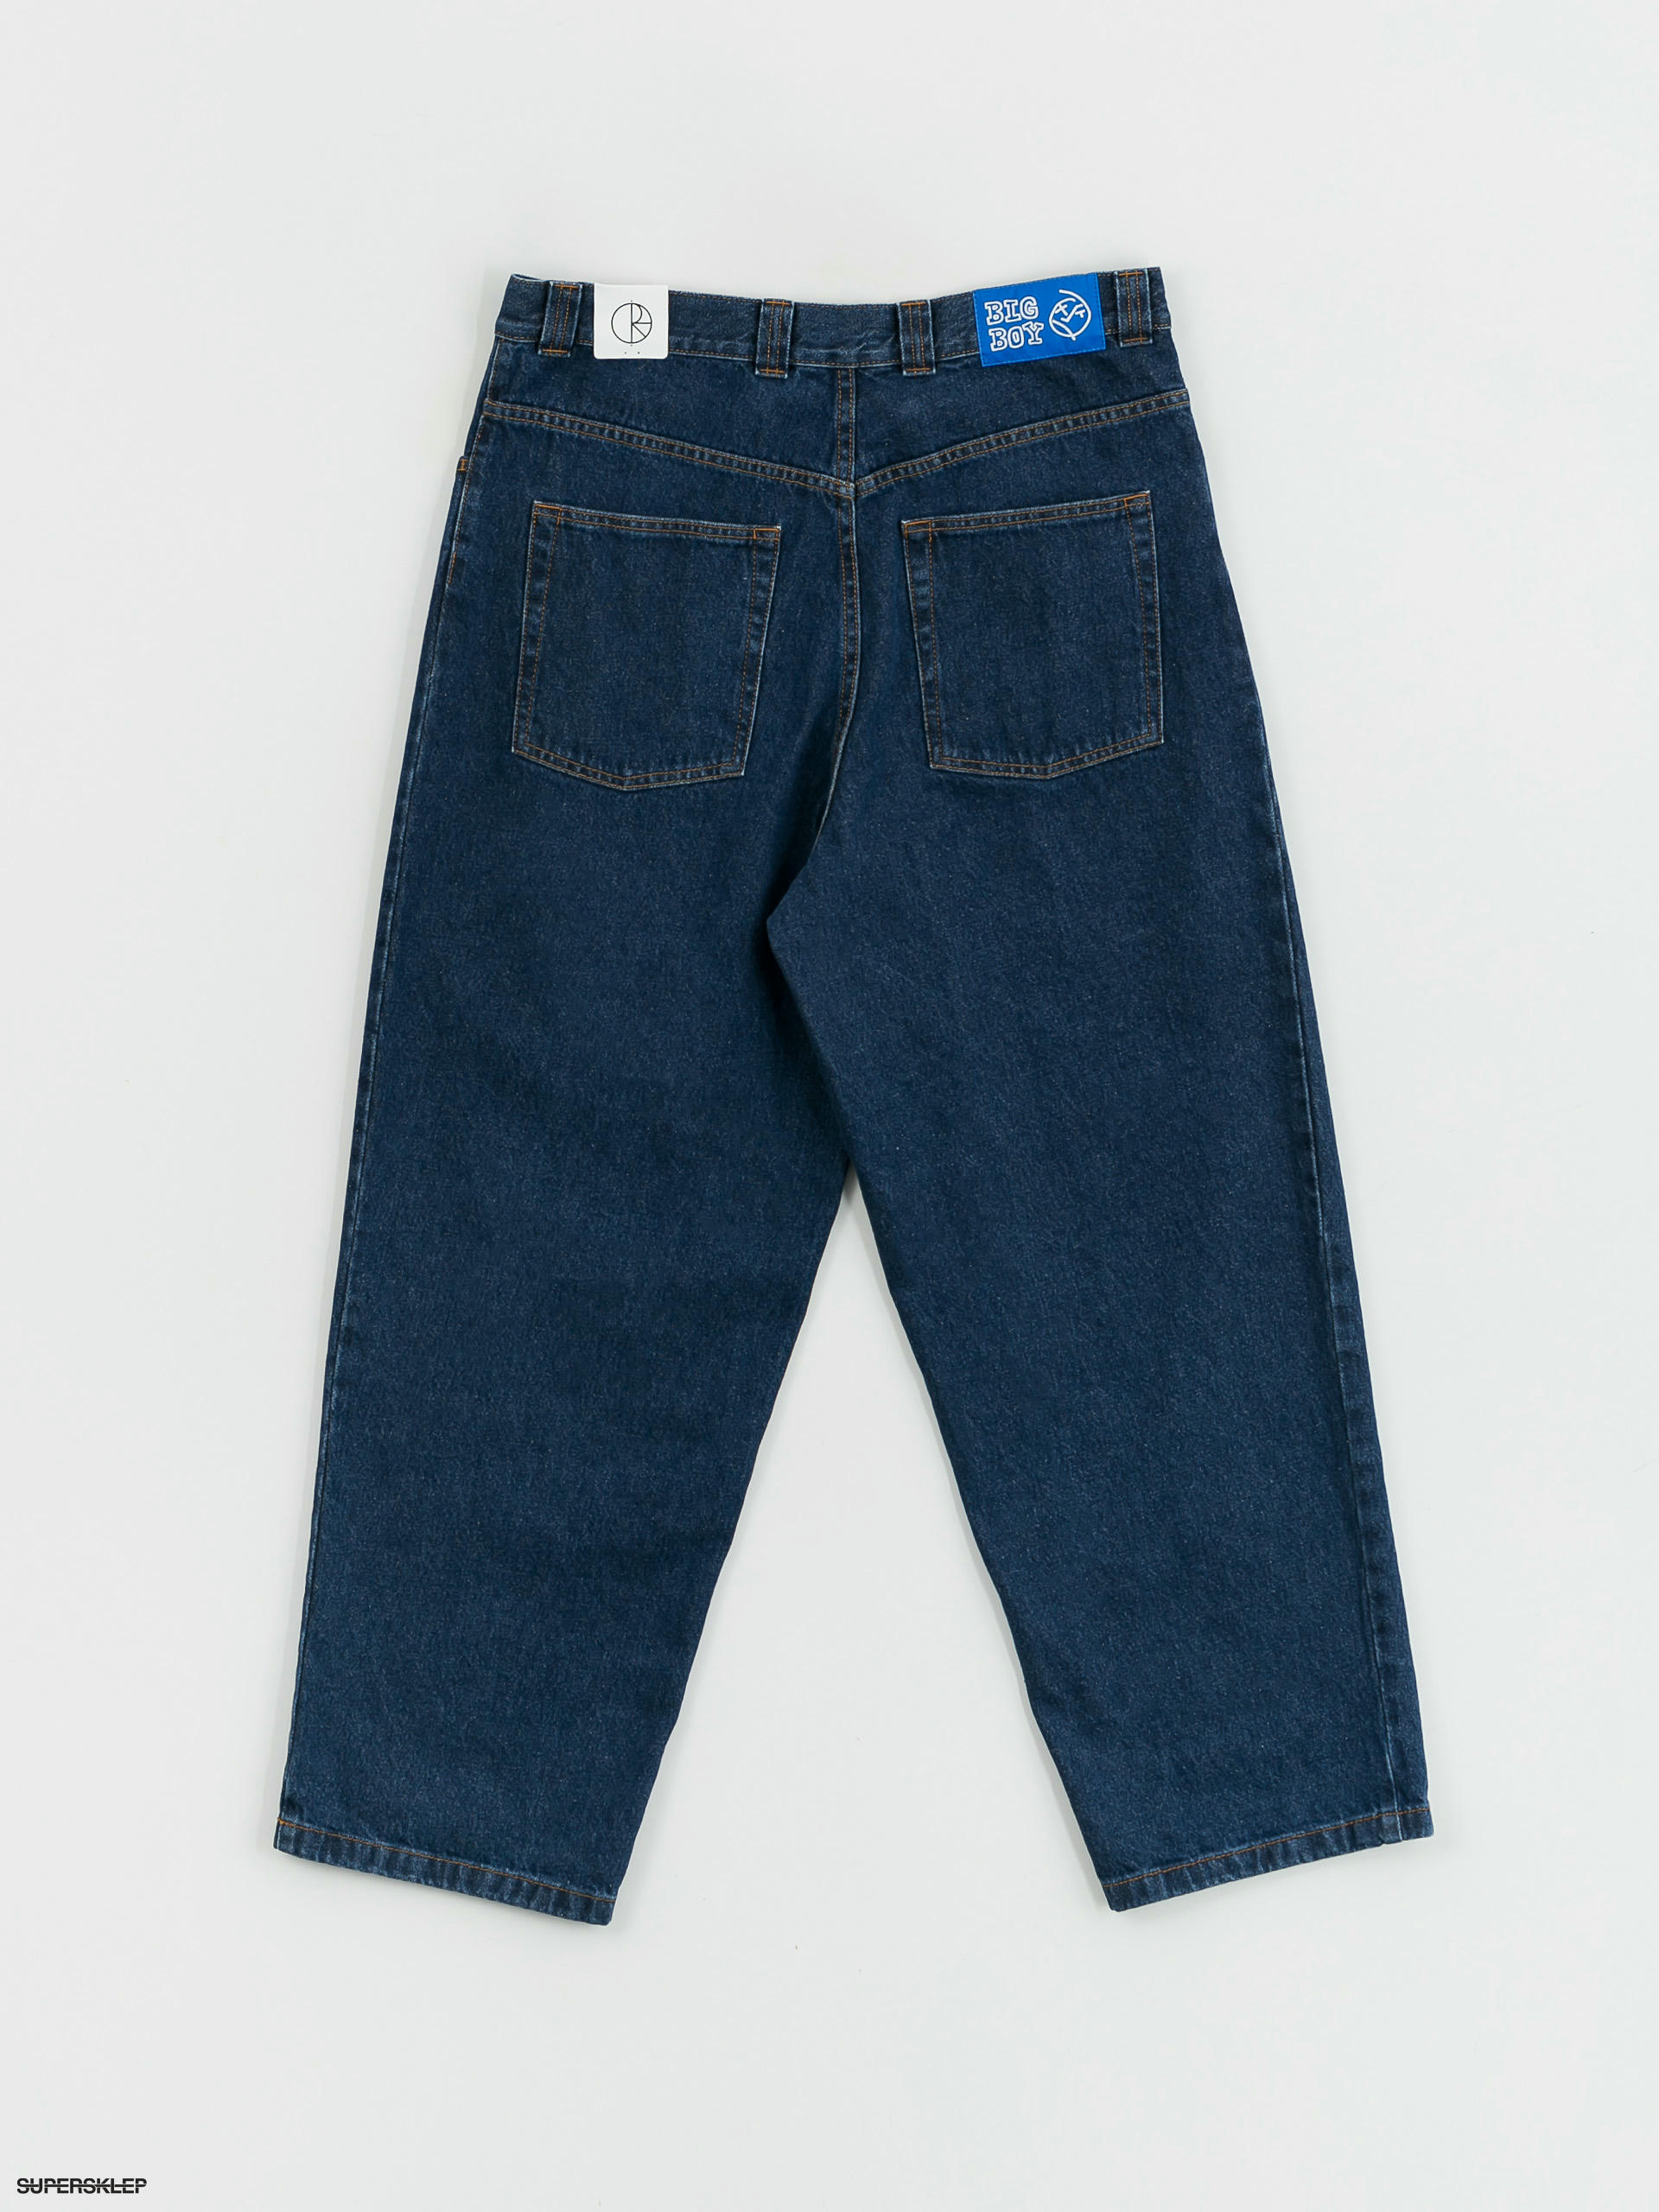 Kalhoty Polar Skate Big Boy Jeans (dark blue)